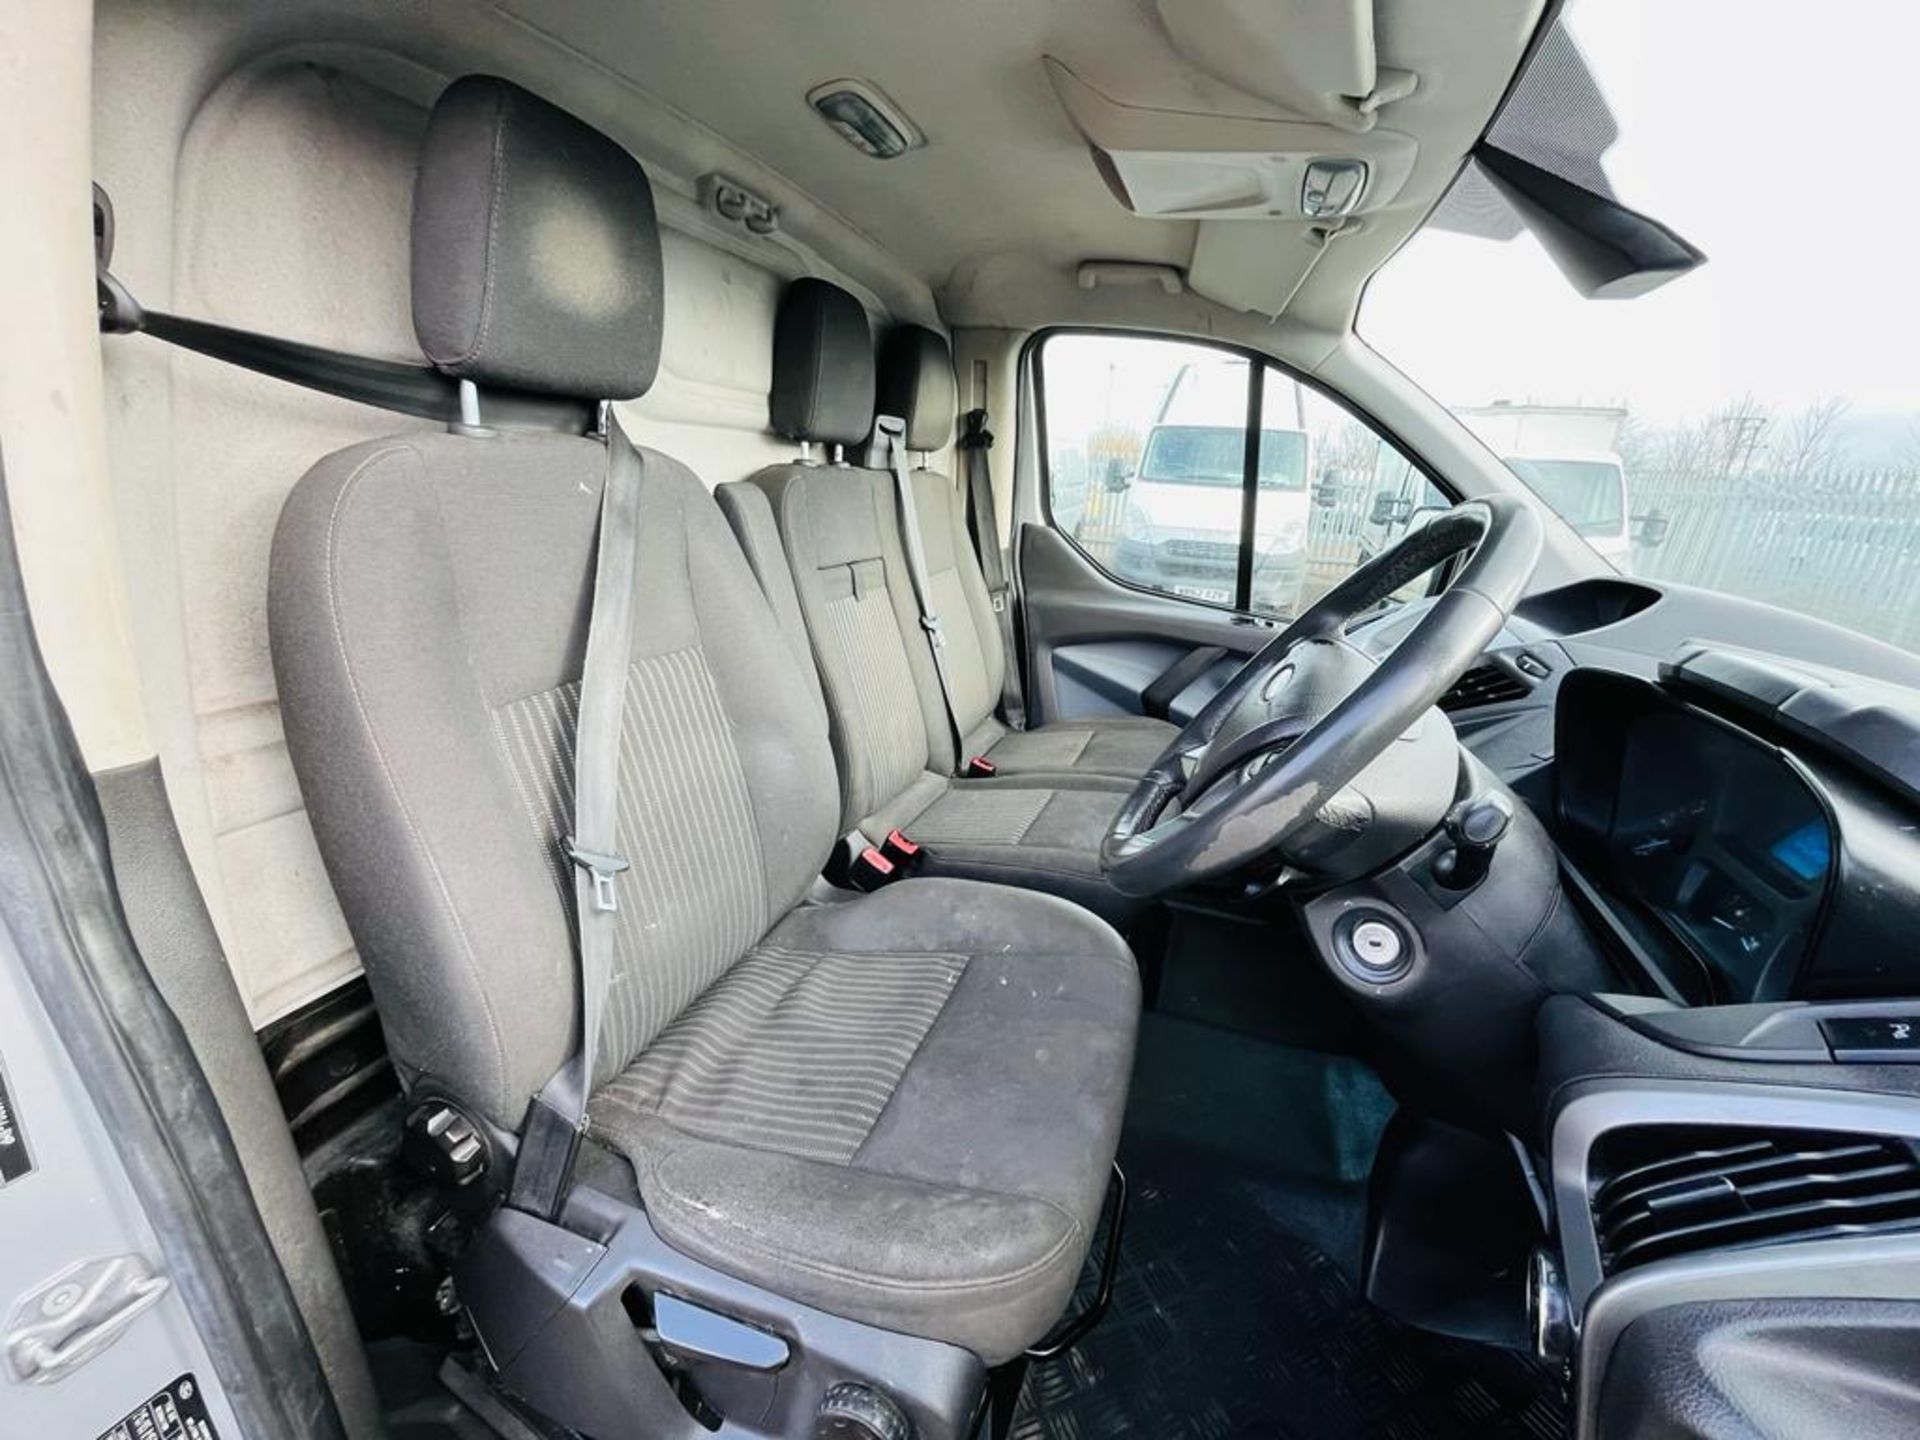 Ford Transit Custom 2.2 TDCI Trend E-Tech 2015 '15 Reg' - Panel Van - Image 13 of 22